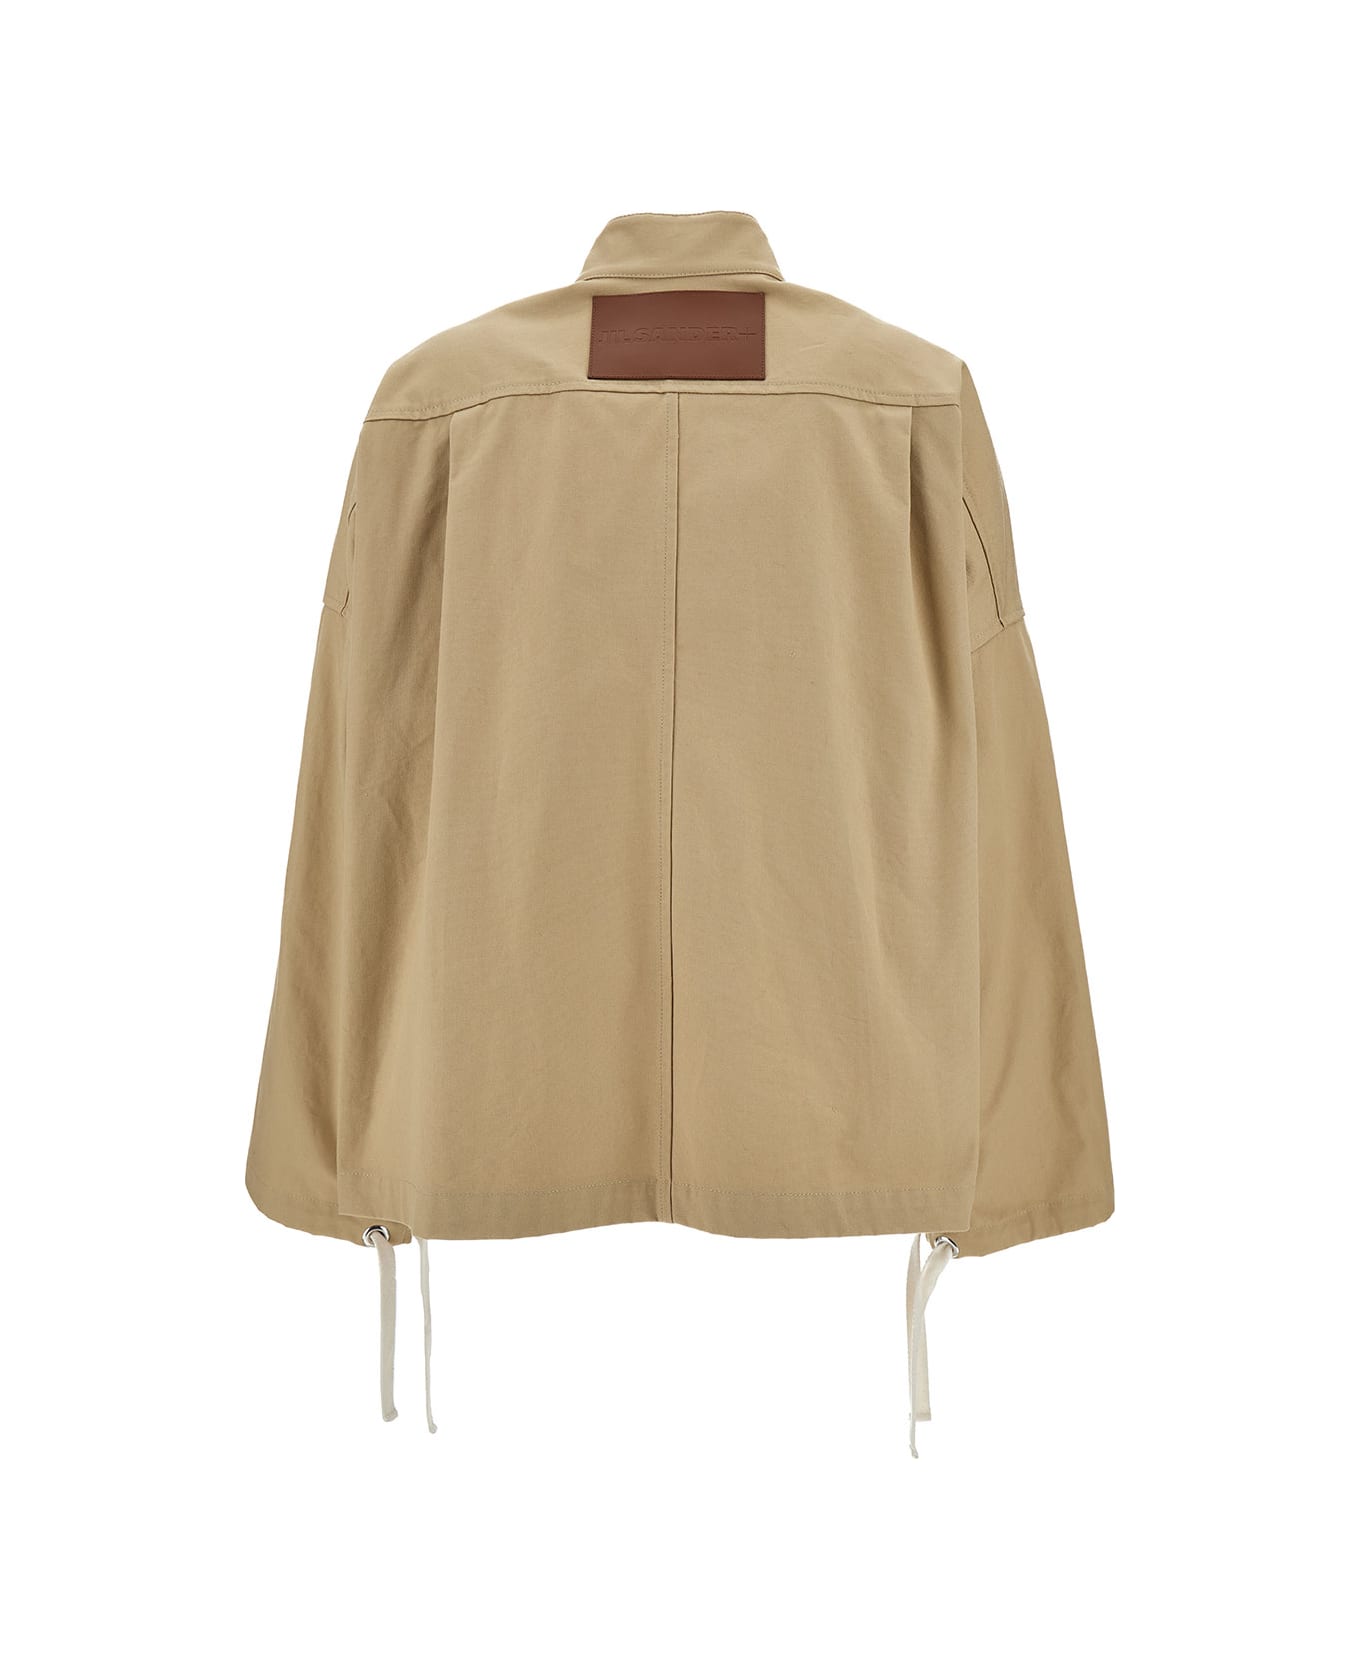 Jil Sander Beige Jacket With Leather Logo Patch In Cotton Canvas Woman - Beige ジャケット